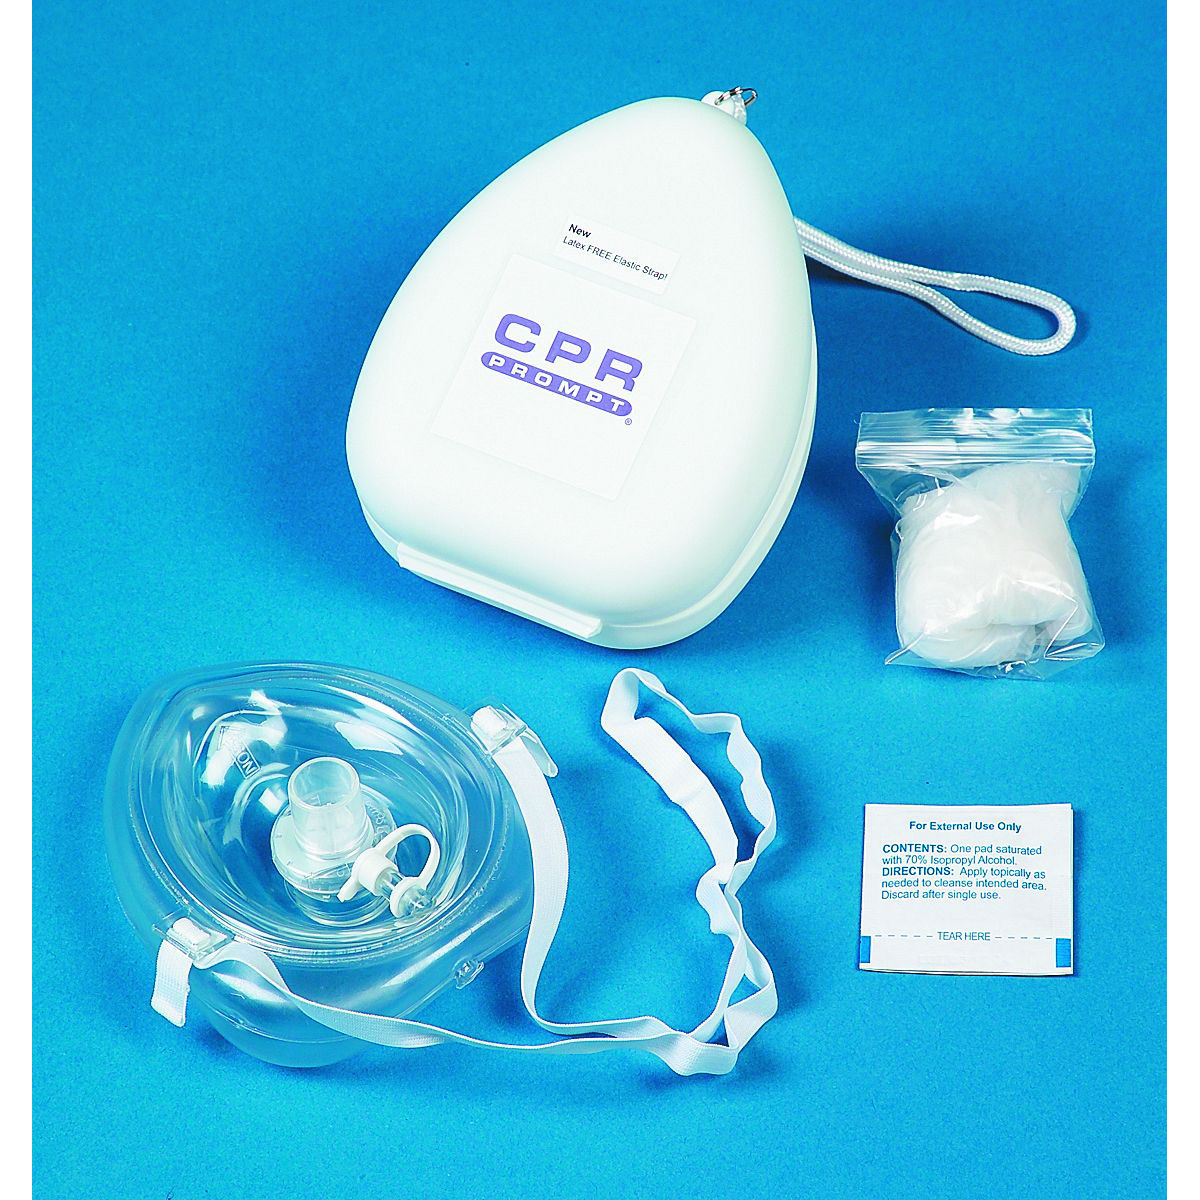 Pocket Mask - 1018855 - Life/form - LF06946U - BLS and CPR Accessories - 3B  Scientific